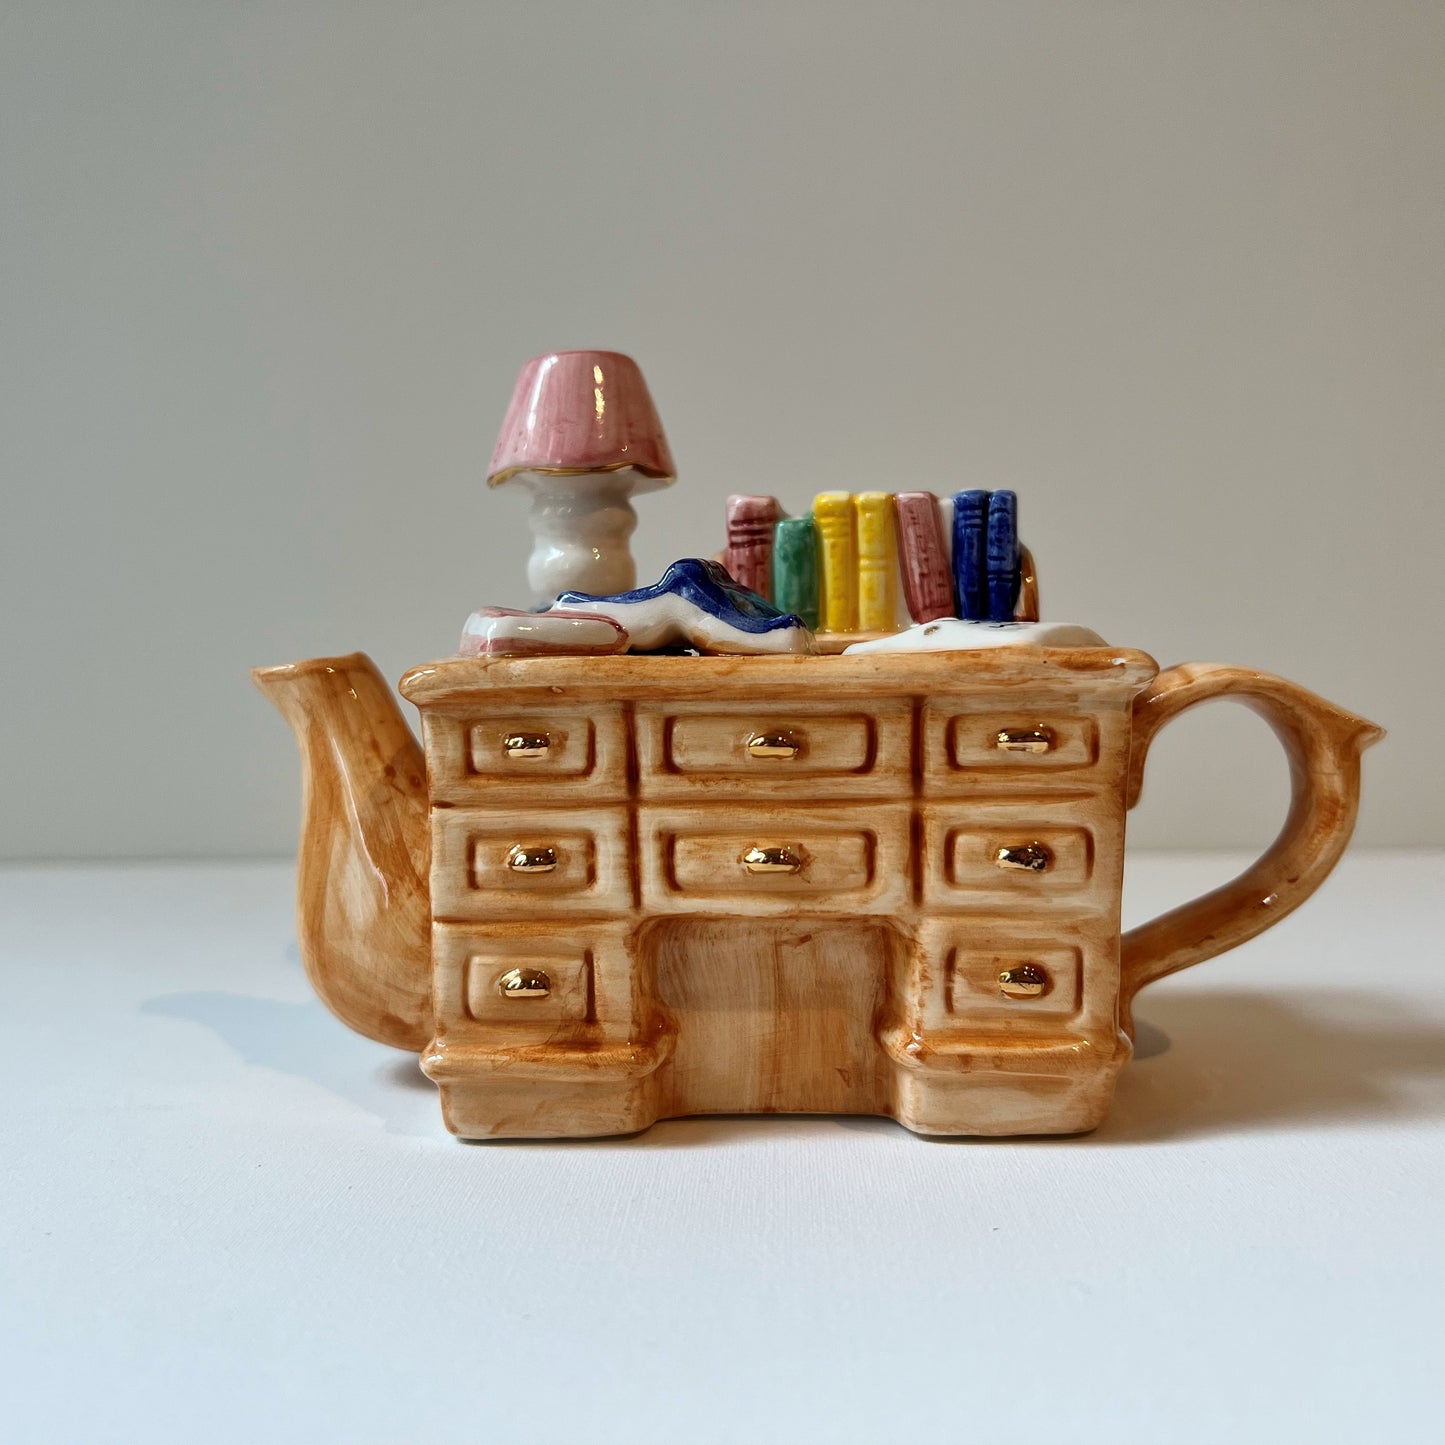 【Vintage】England - Desk Teapot